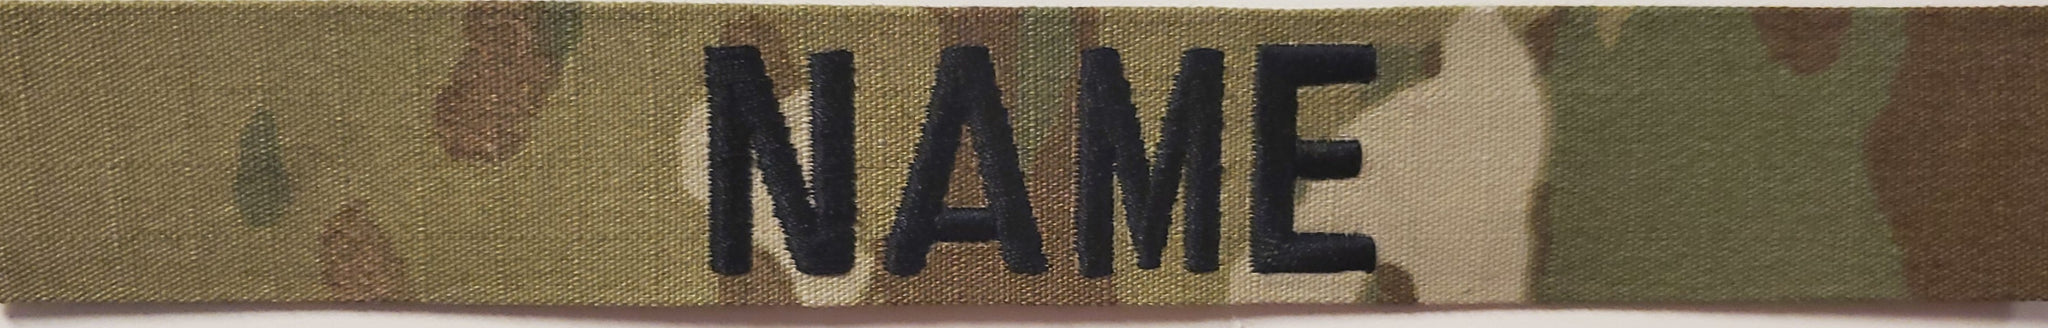 Name Tape - U.S. Army